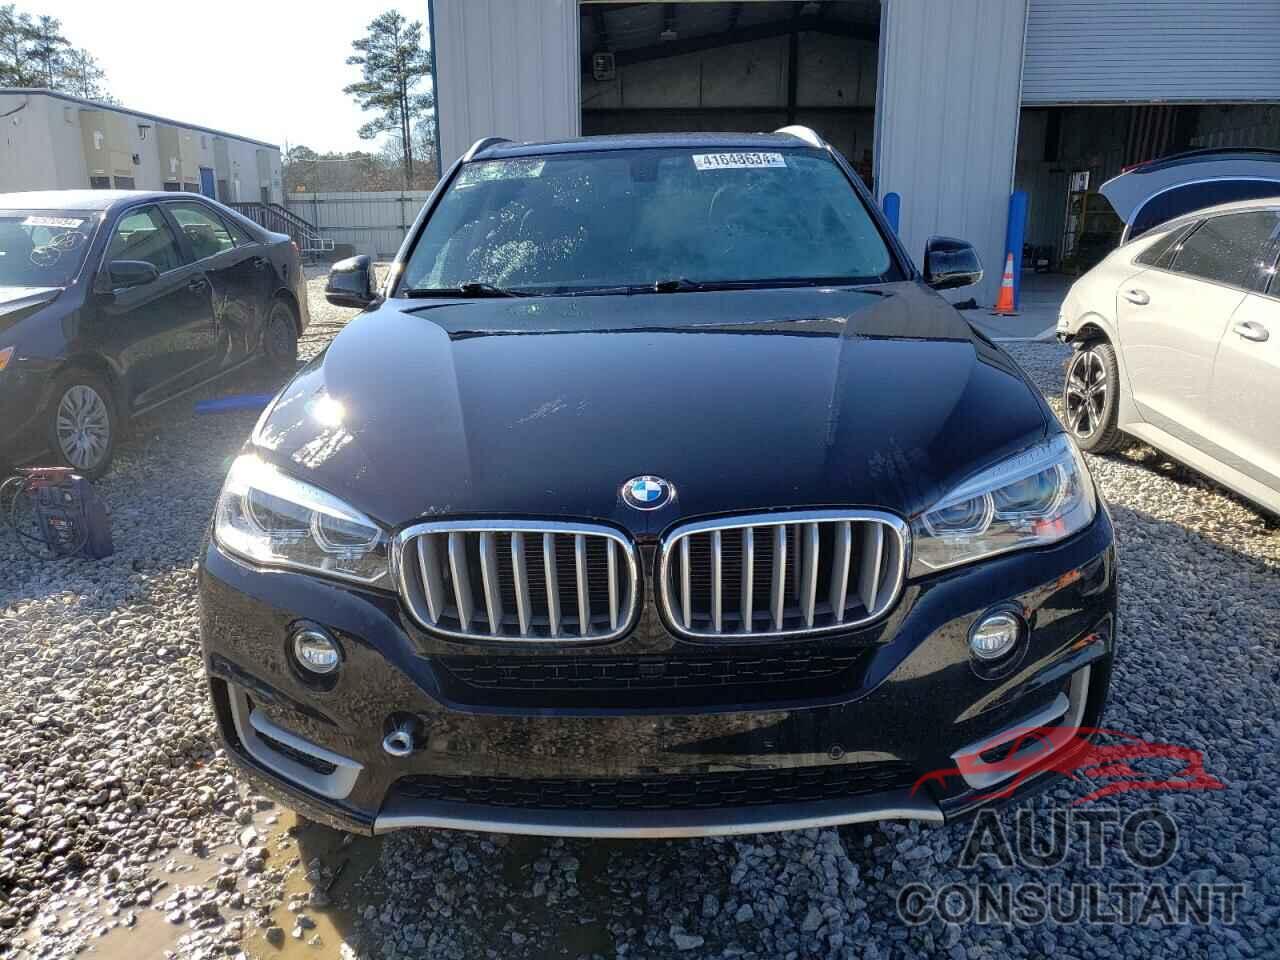 BMW X5 2016 - 5UXKR2C53G0R71715